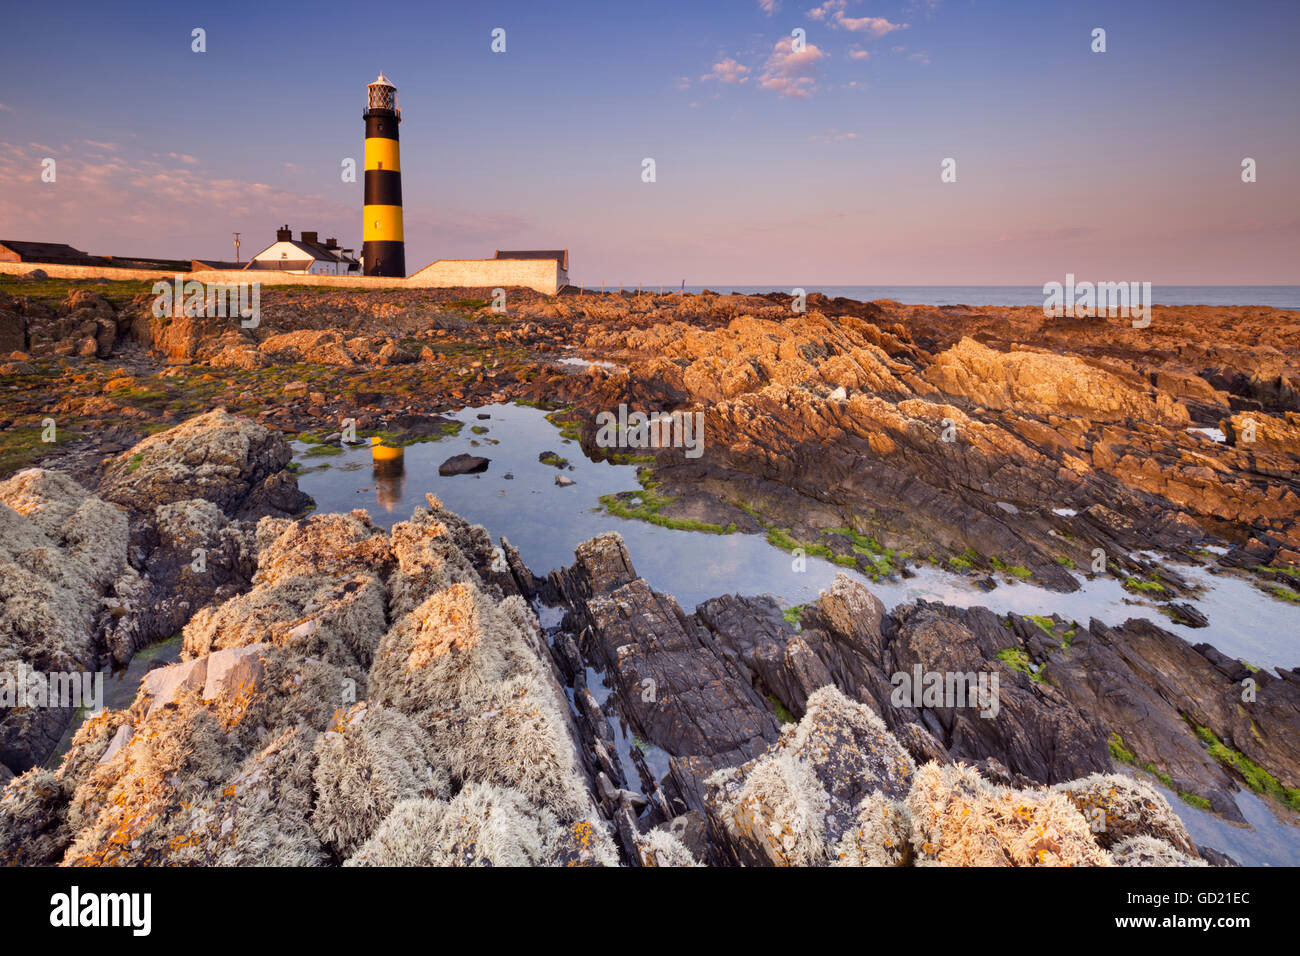 El Saint John's Point Lighthouse en Irlanda del Norte fotografiado al atardecer. Foto de stock